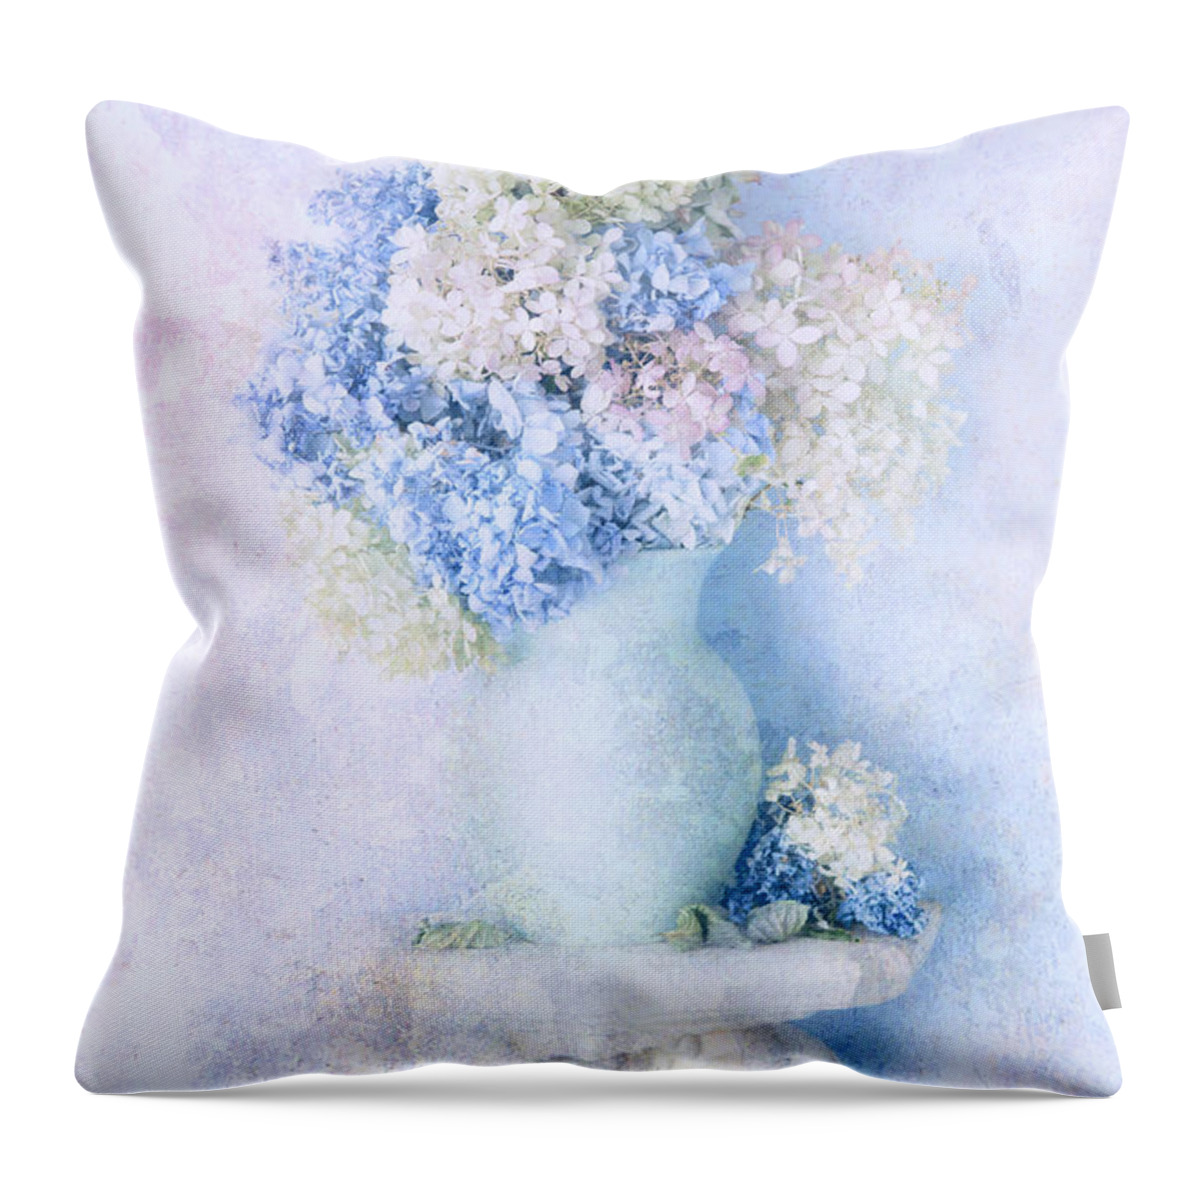 Hydrangea Throw Pillow featuring the photograph Blue Hydrangea by Theresa Tahara